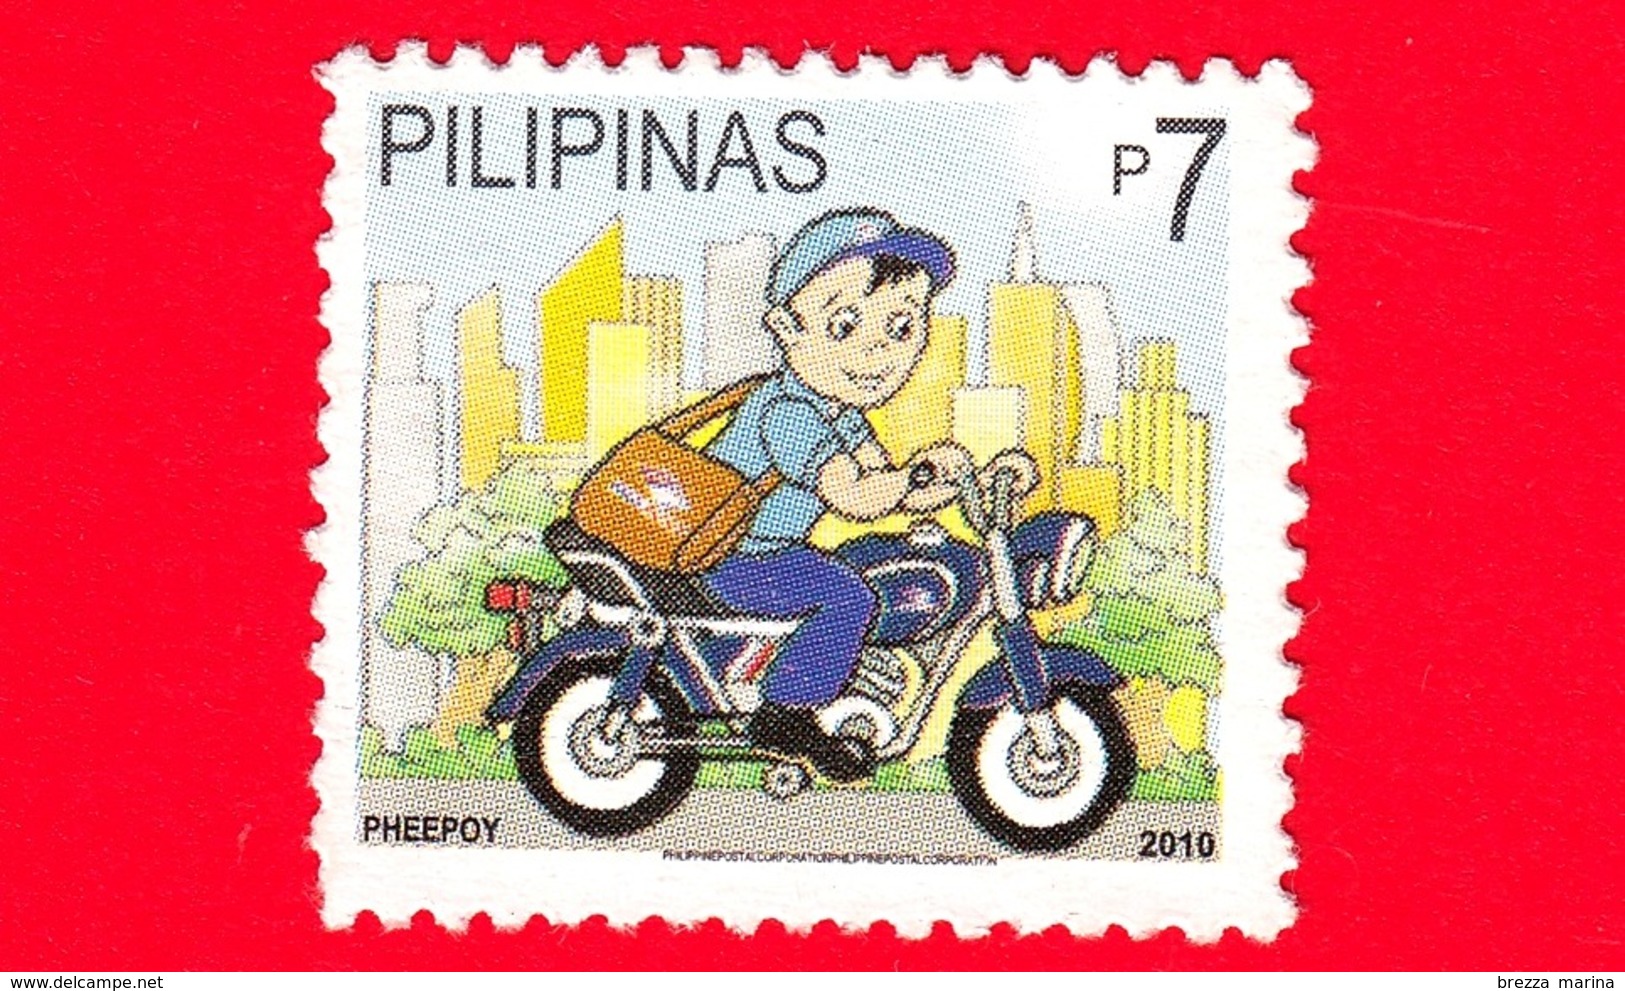 FILIPPINE - Usato - 2010 - Pheepoy III, Moscotte Società Filippina Postale (Philpost) - 7 - Filippine